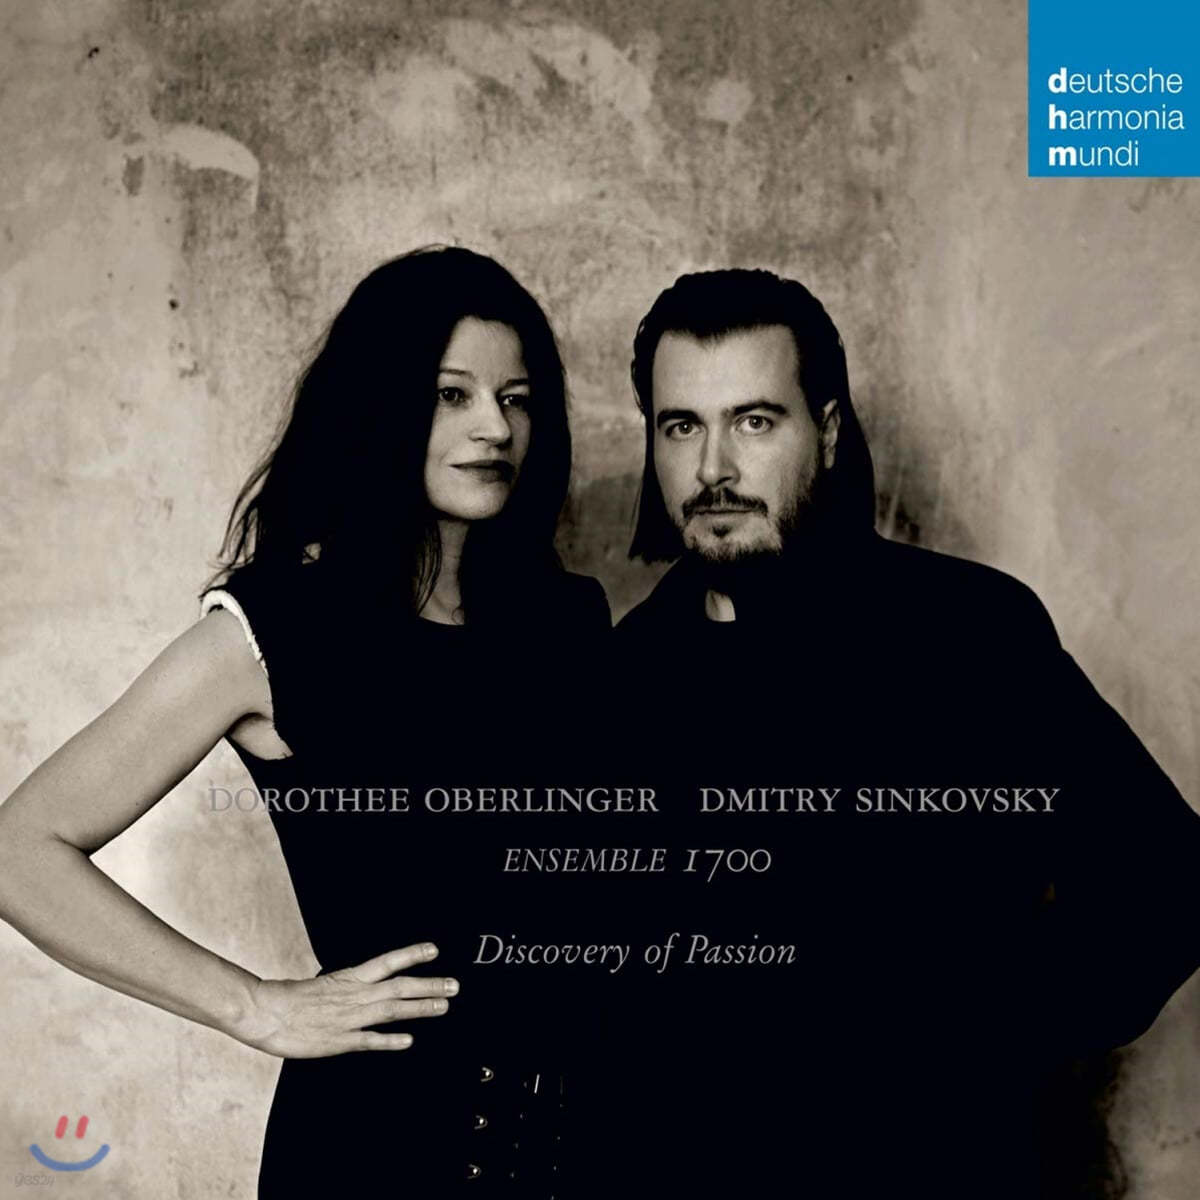 Dorothee Oberlinger / Dmitry Sinkovsky 고음악 모음집 (Discovery of Passion)